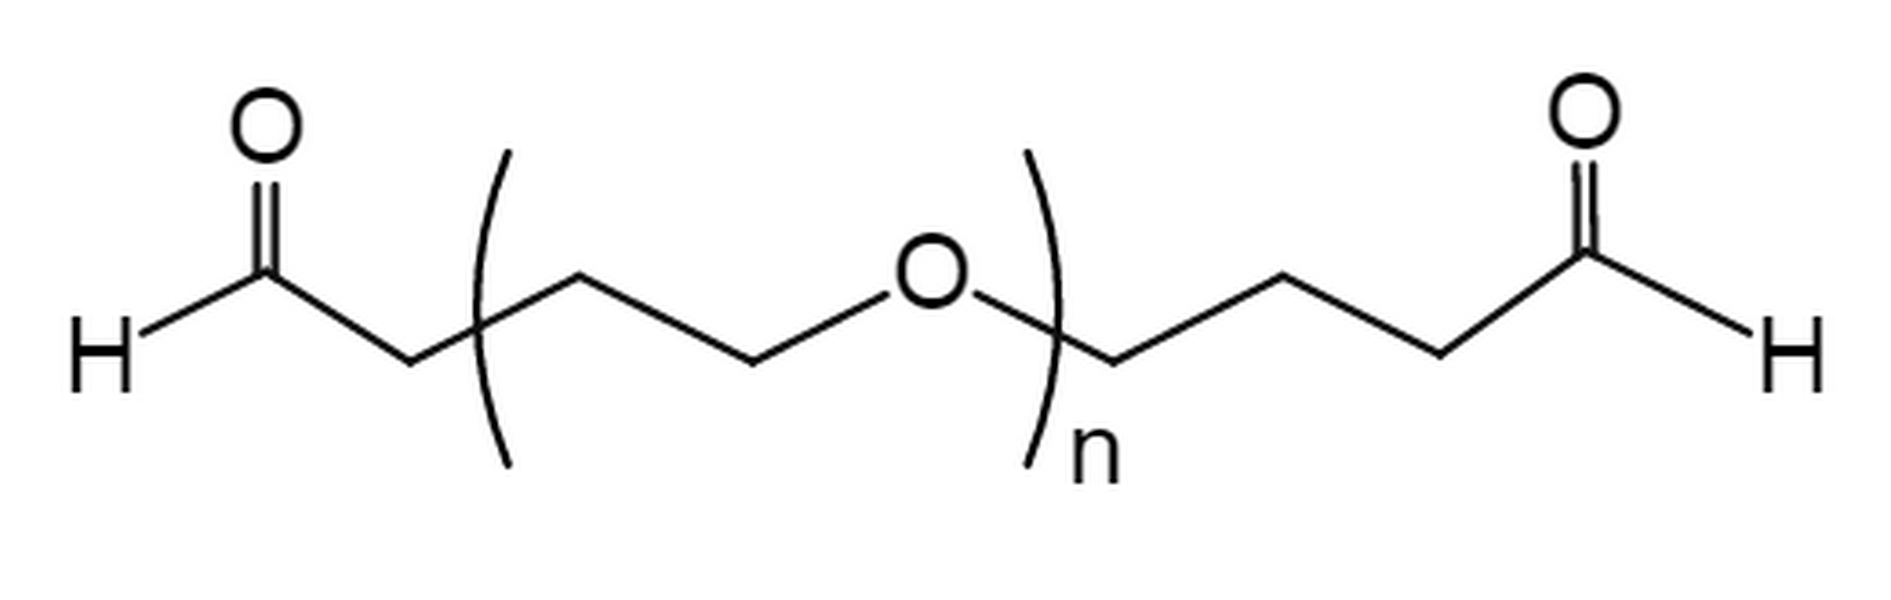 ButyrAldehyde-PEG-ButyrAldehyde, MW 2K